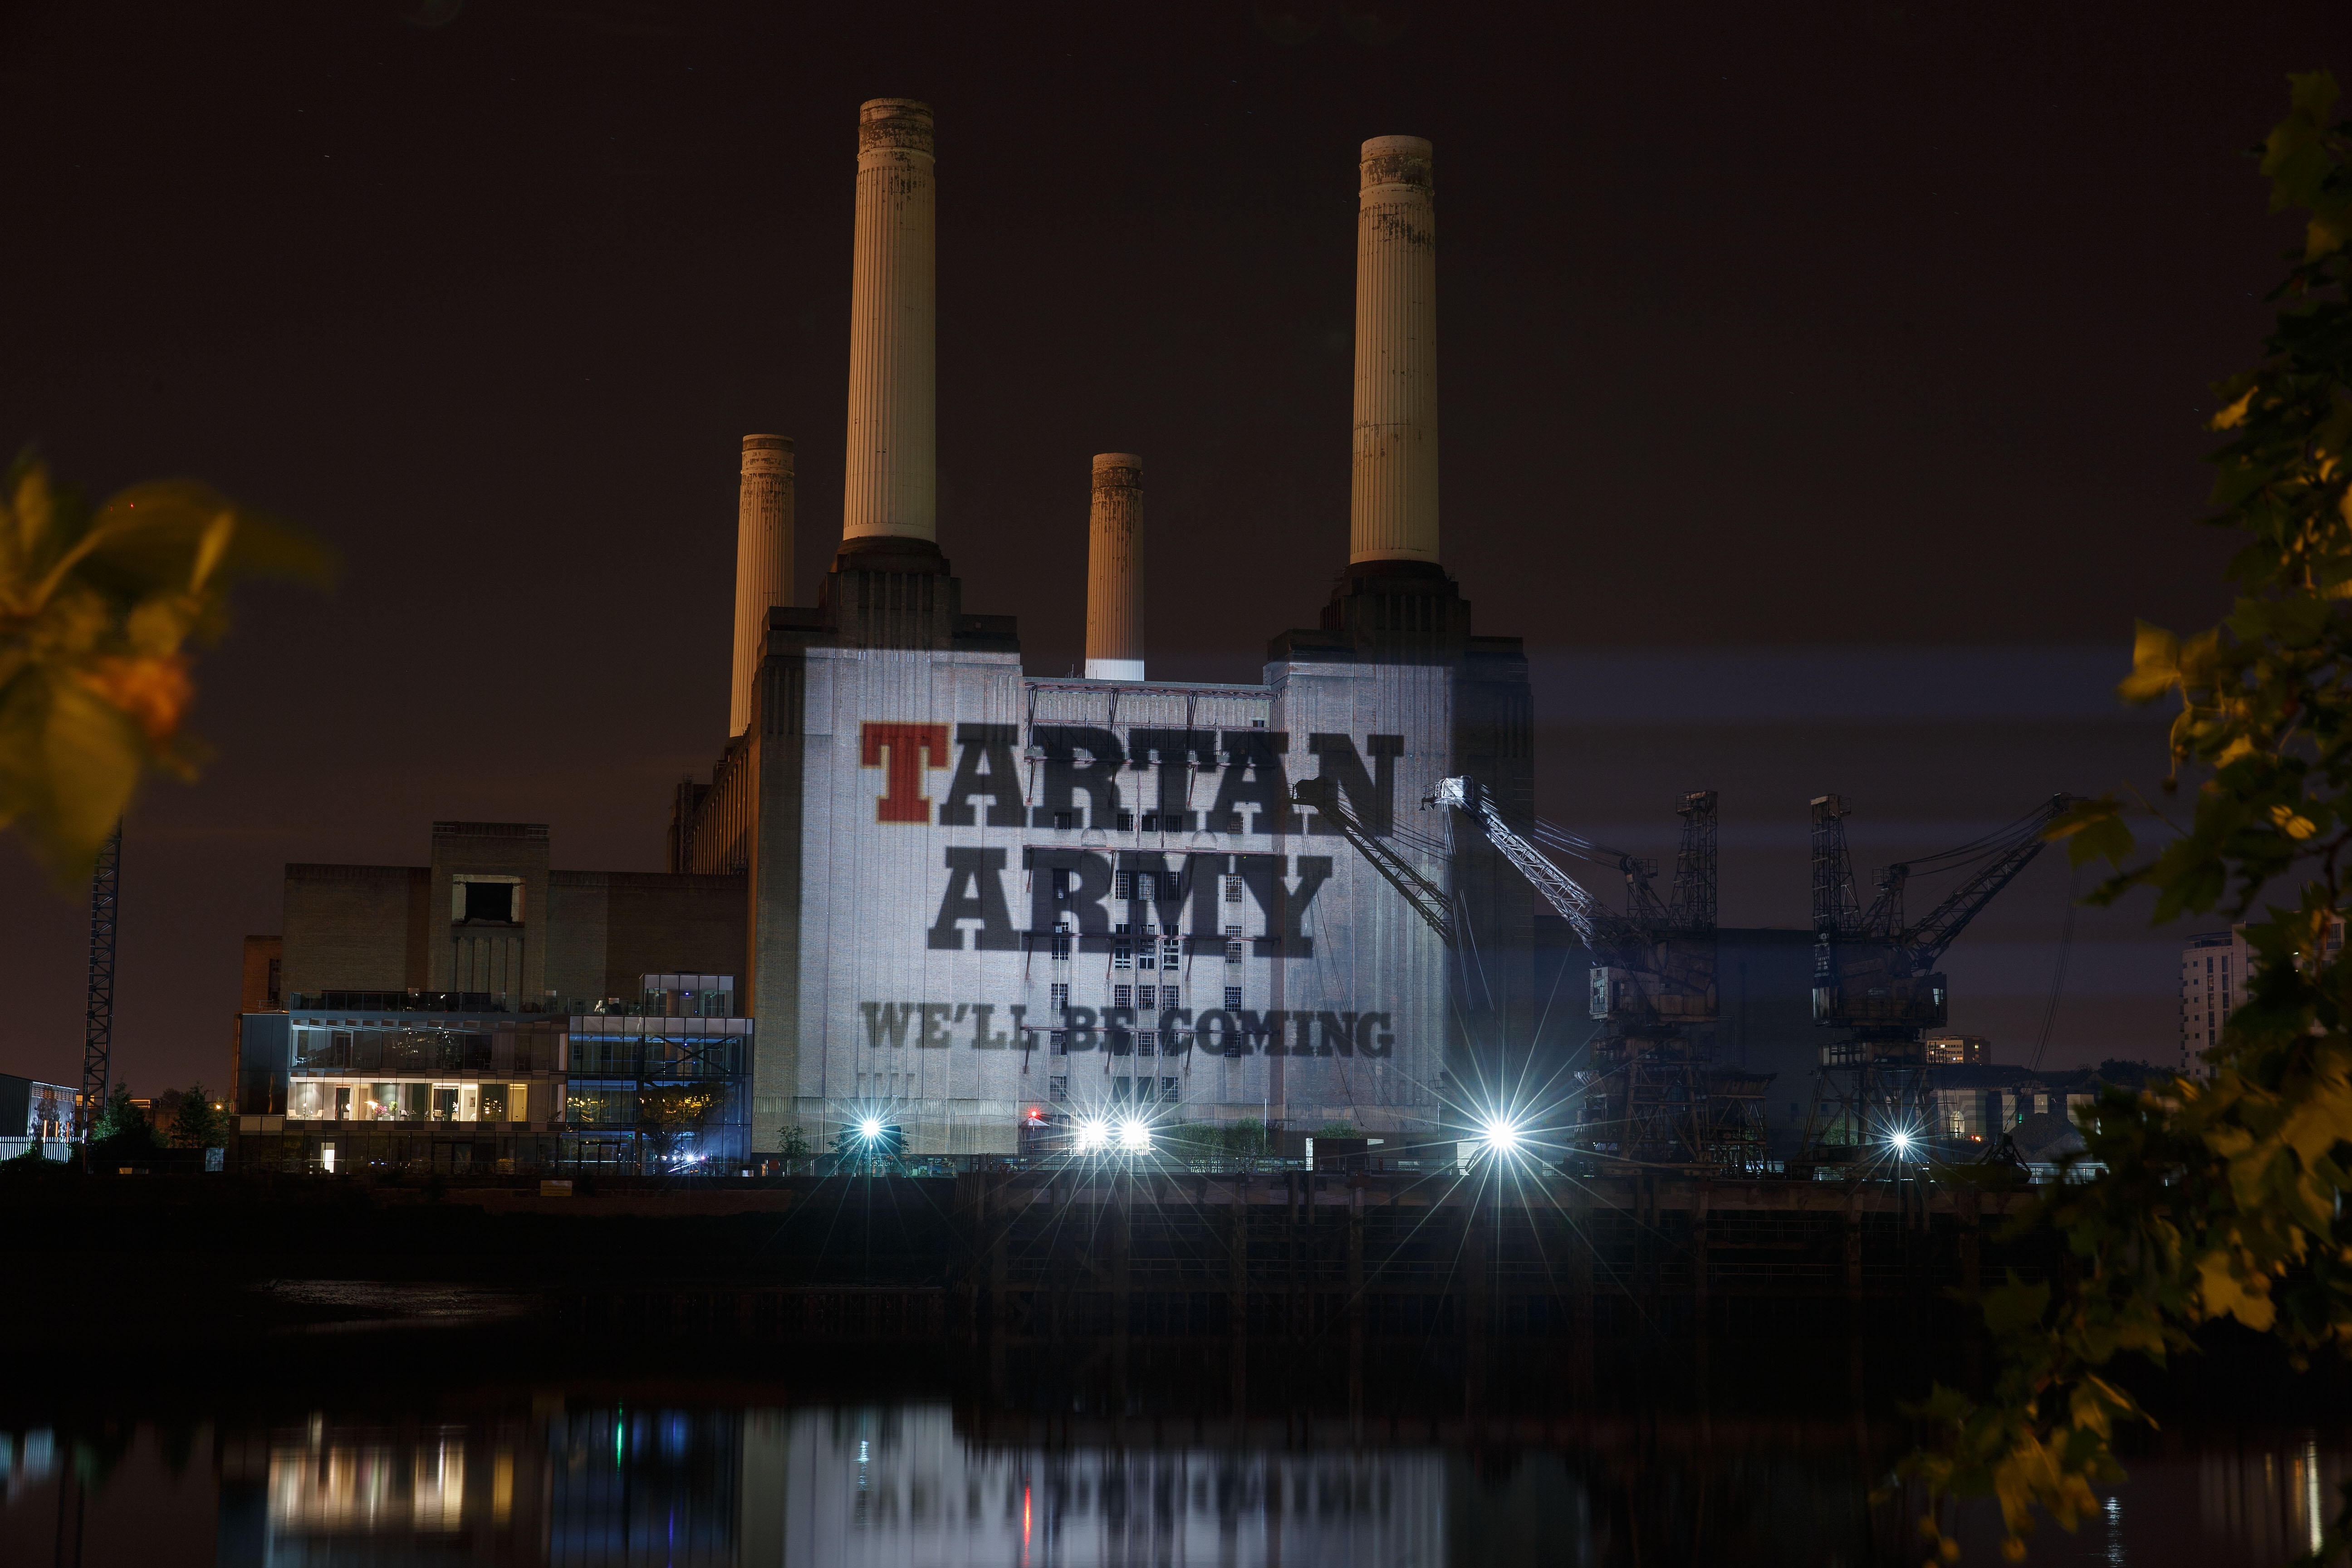 TARTAN ARMY PROJECTIONS BATTERSEA POWER STATION